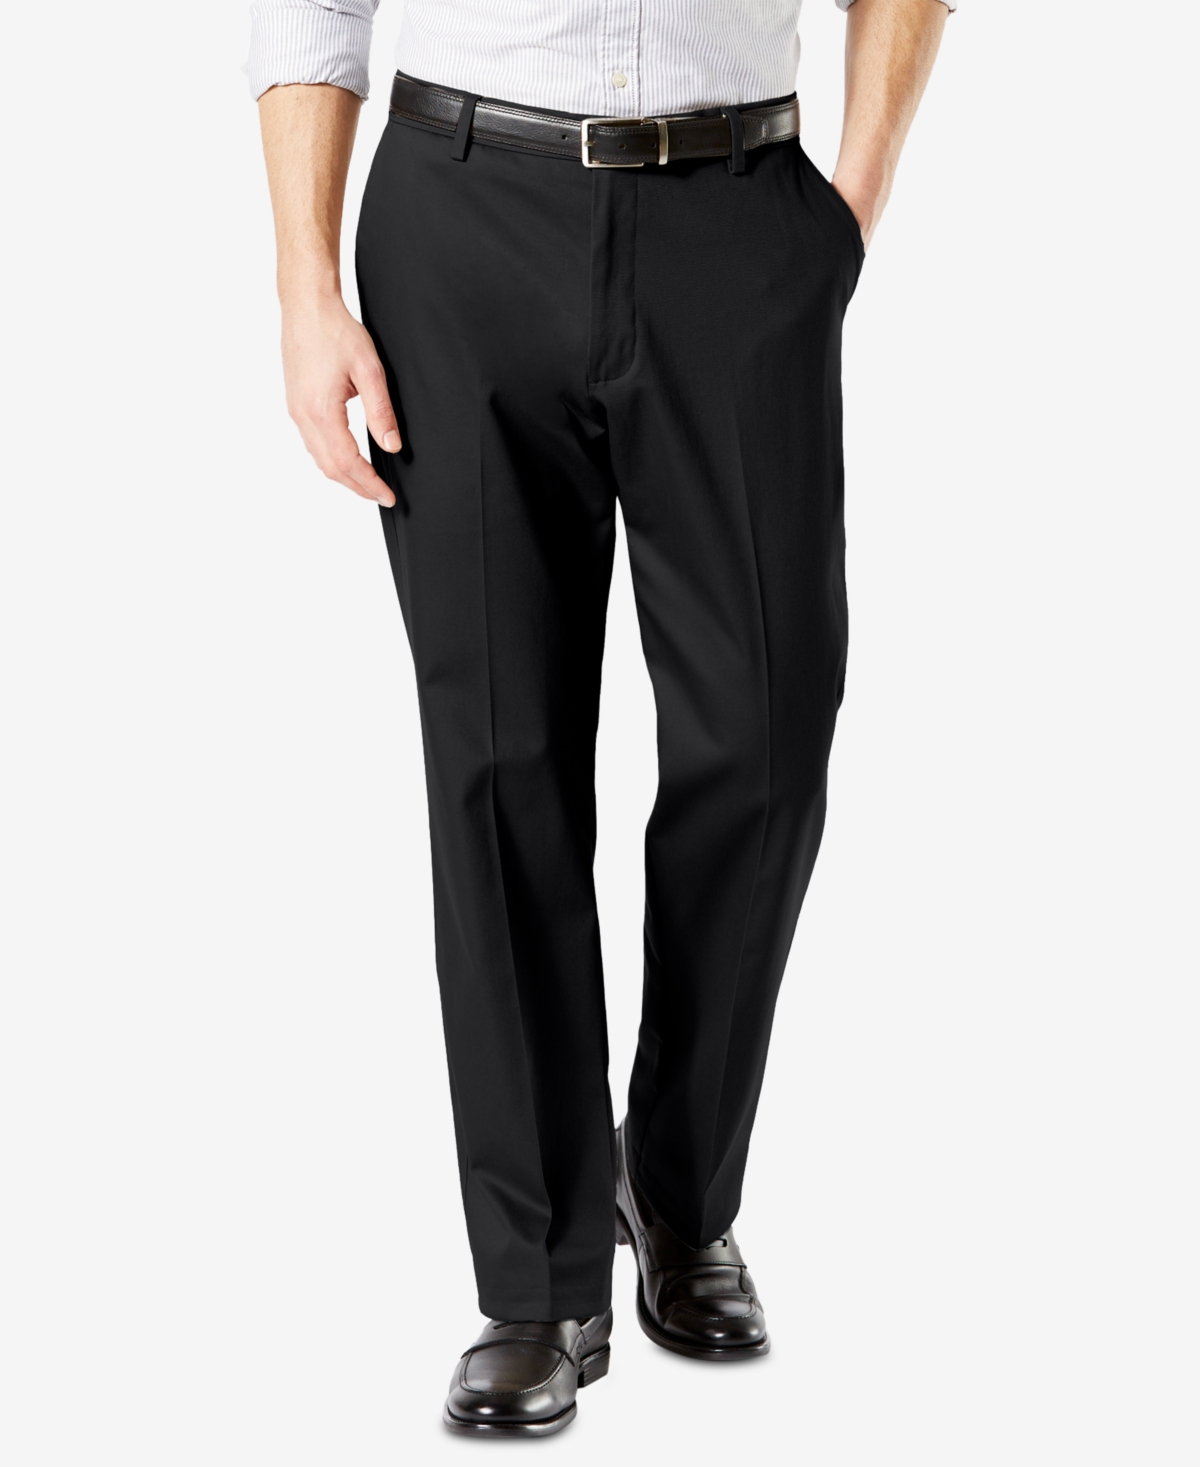 Men's Signature Lux Cotton Classic Fit Creased Stretch Khaki Pants - Black